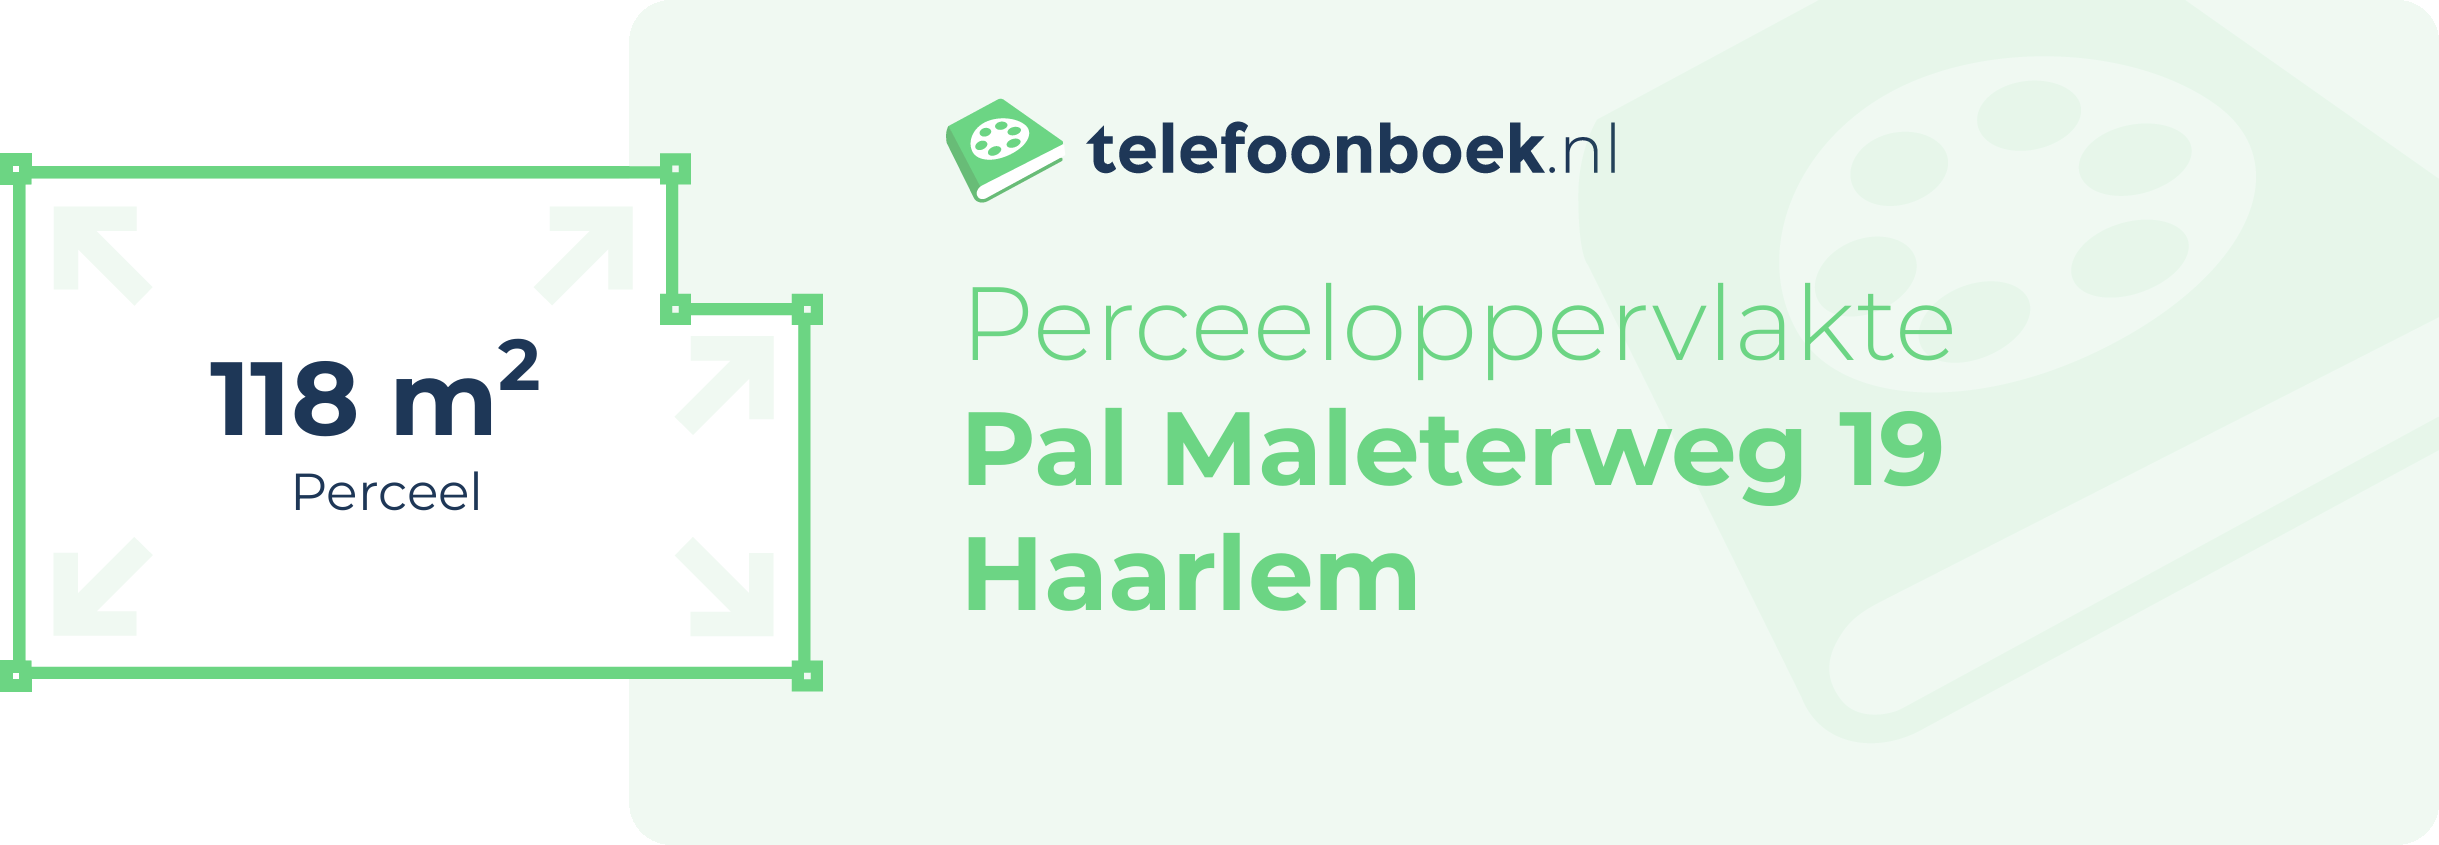 Perceeloppervlakte Pal Maleterweg 19 Haarlem